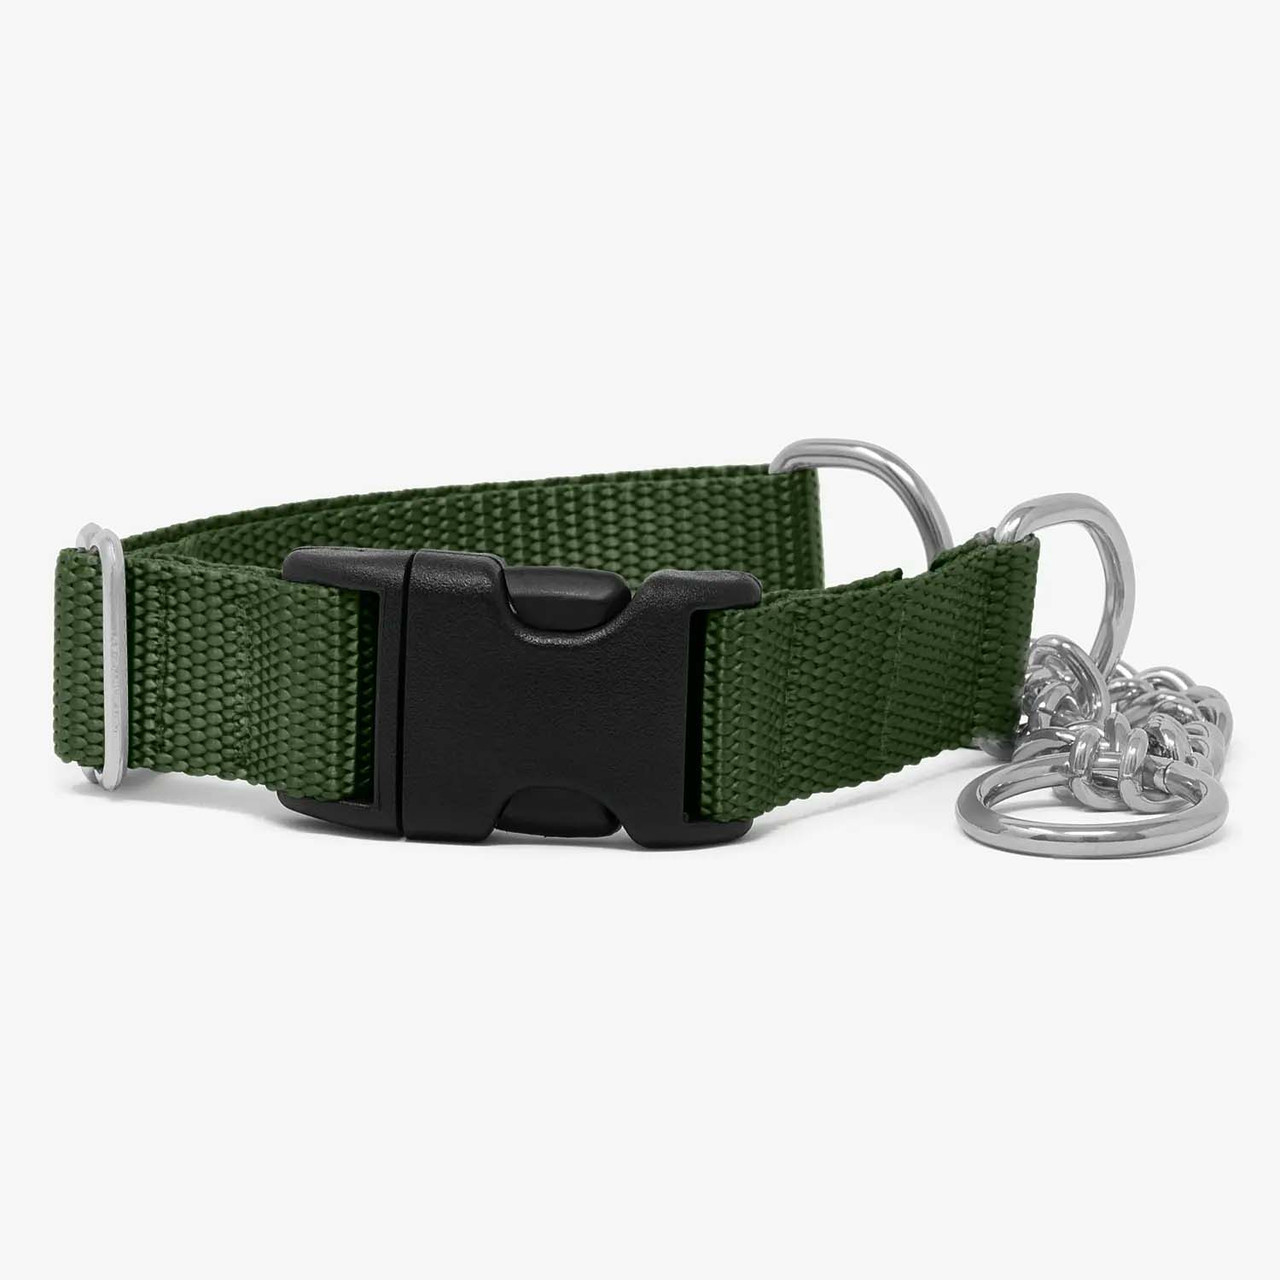 Luxury dog monogram collar with matching leash set combo